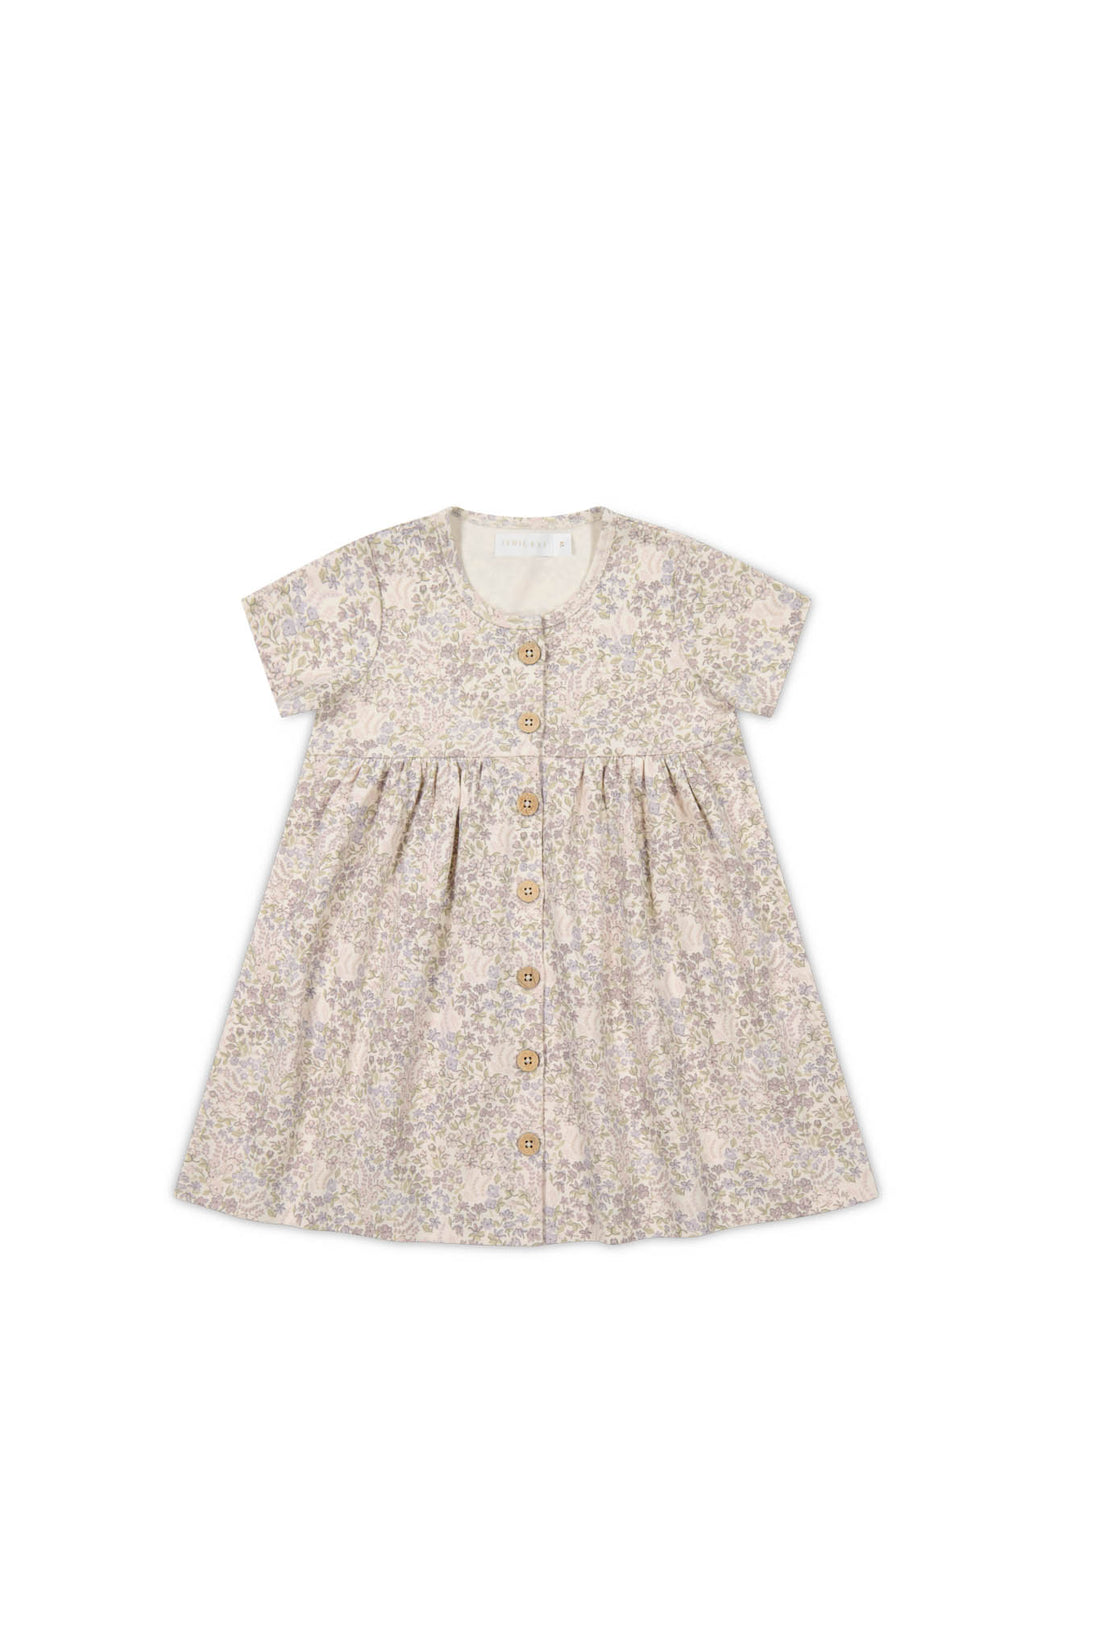 Organic Cotton Lola Dress - April Floral Mauve Childrens Dress from Jamie Kay NZ